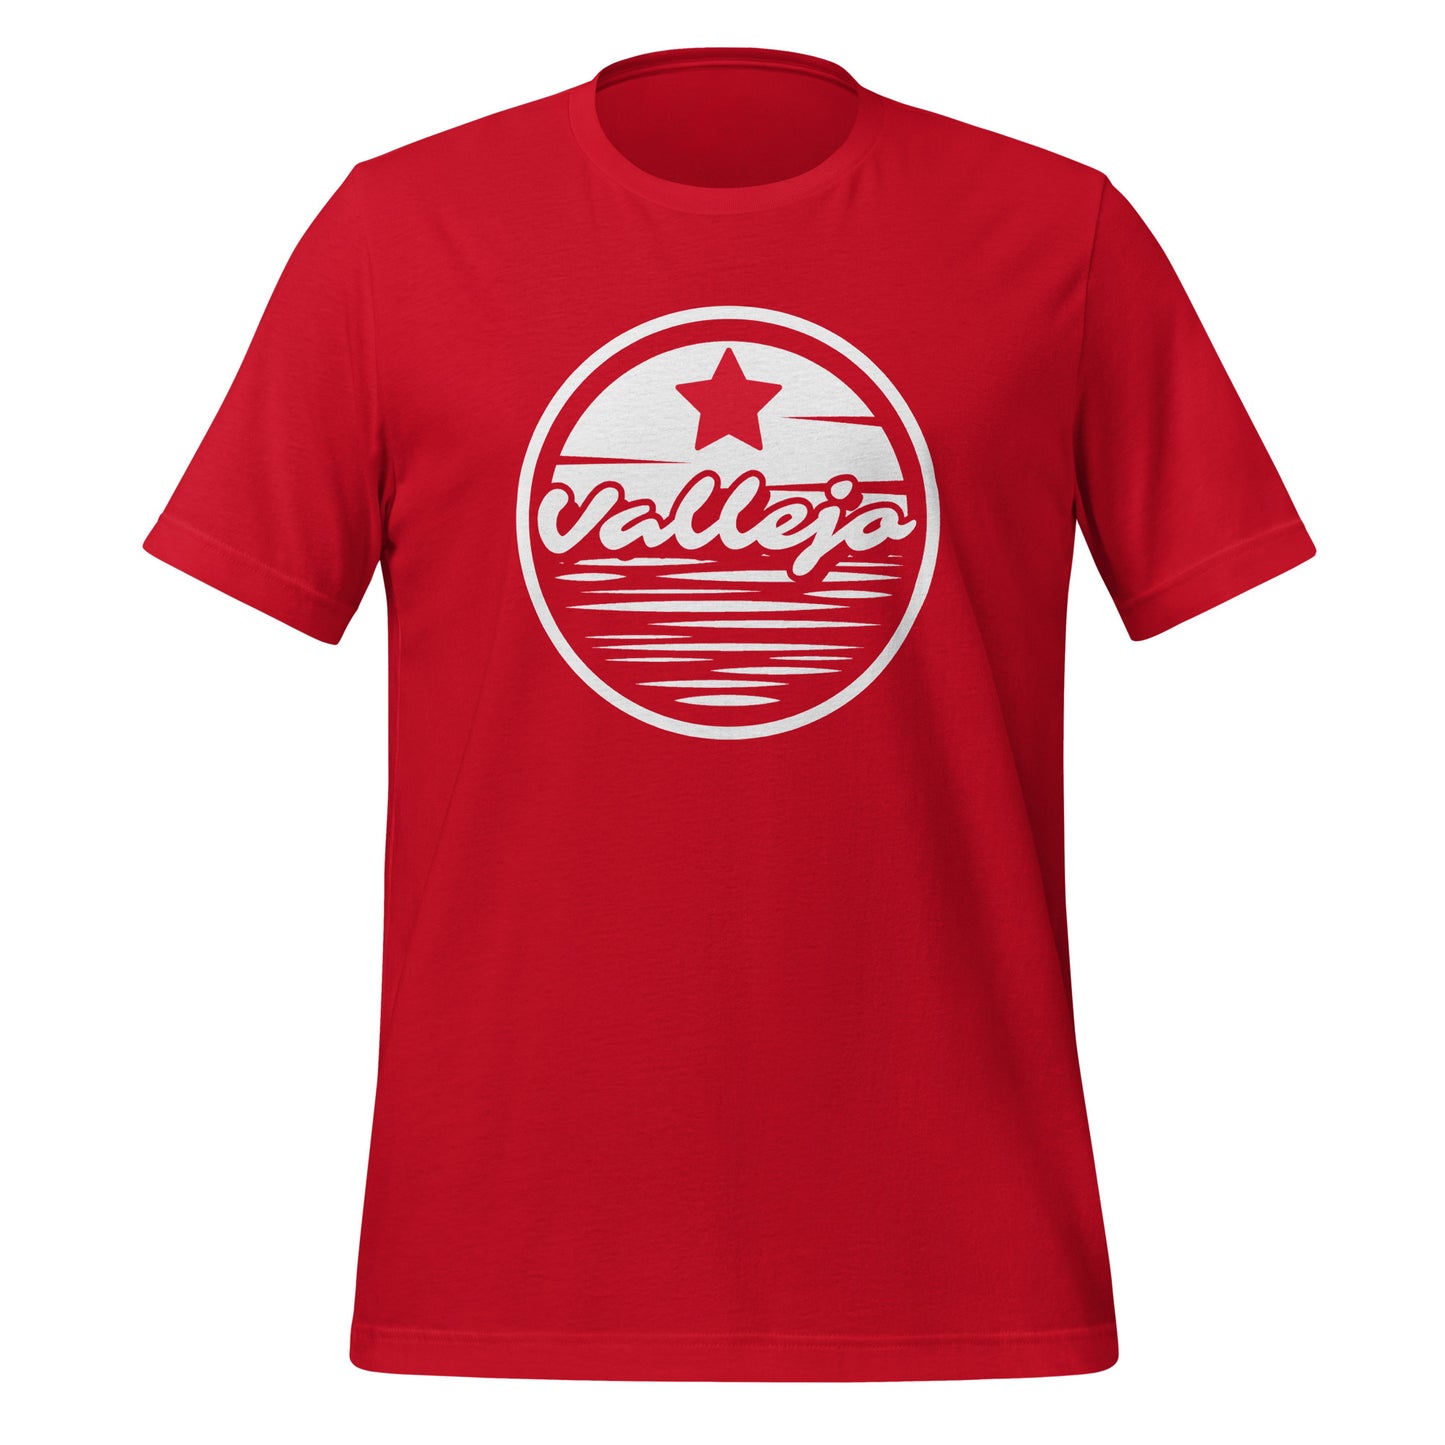 Vallejo (My Town) Unisex T-Shirt